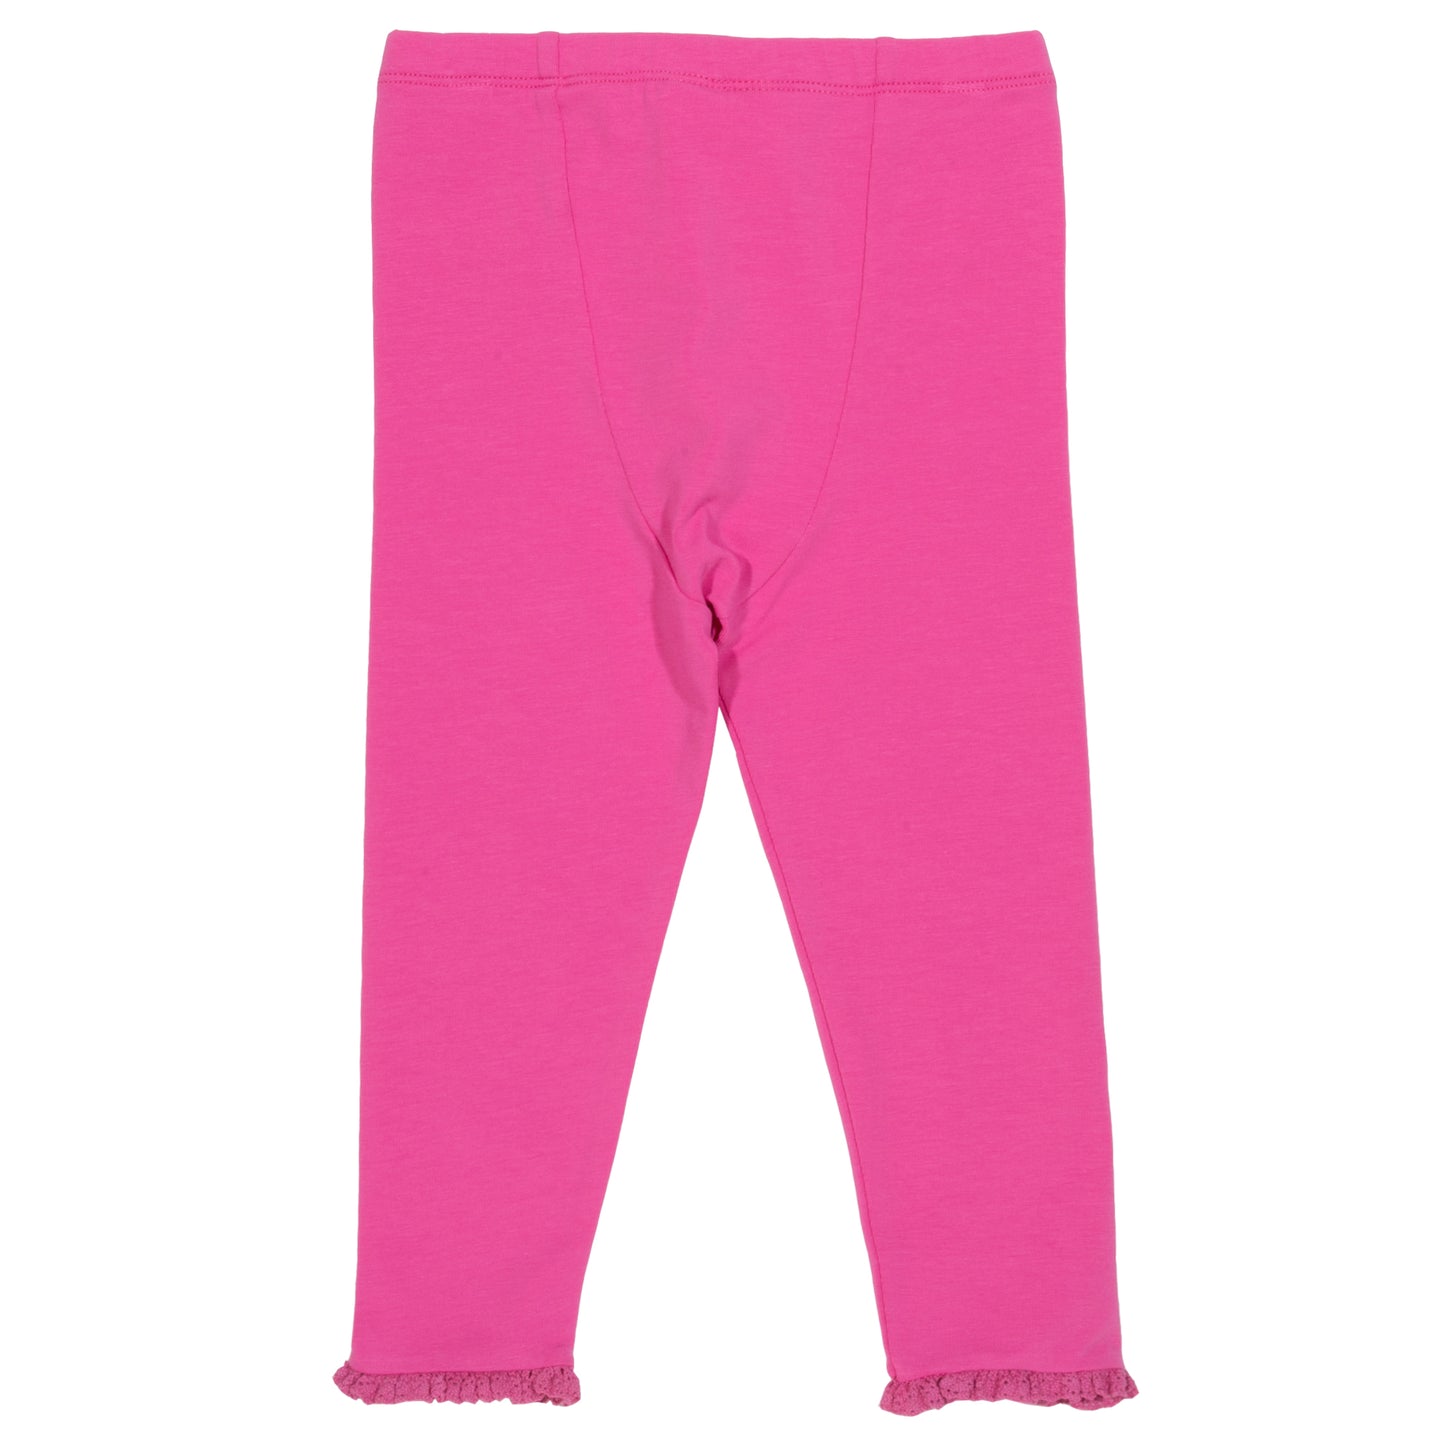 Frill coral pink leggings